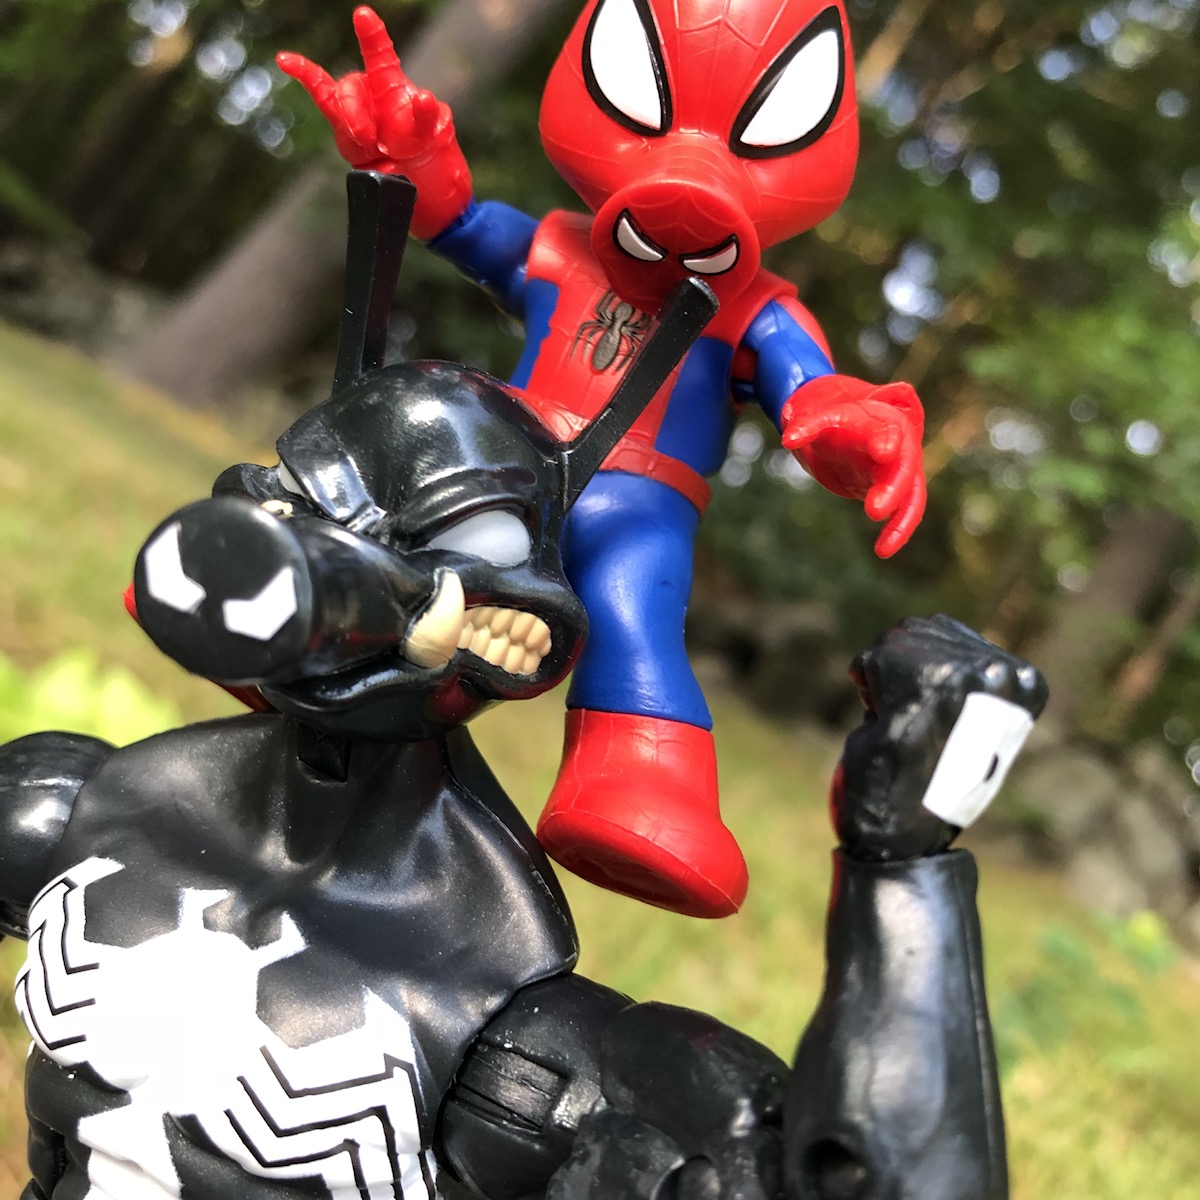 Venom Marvel Legends Spider-Ham Figure Review - Marvel Toy News